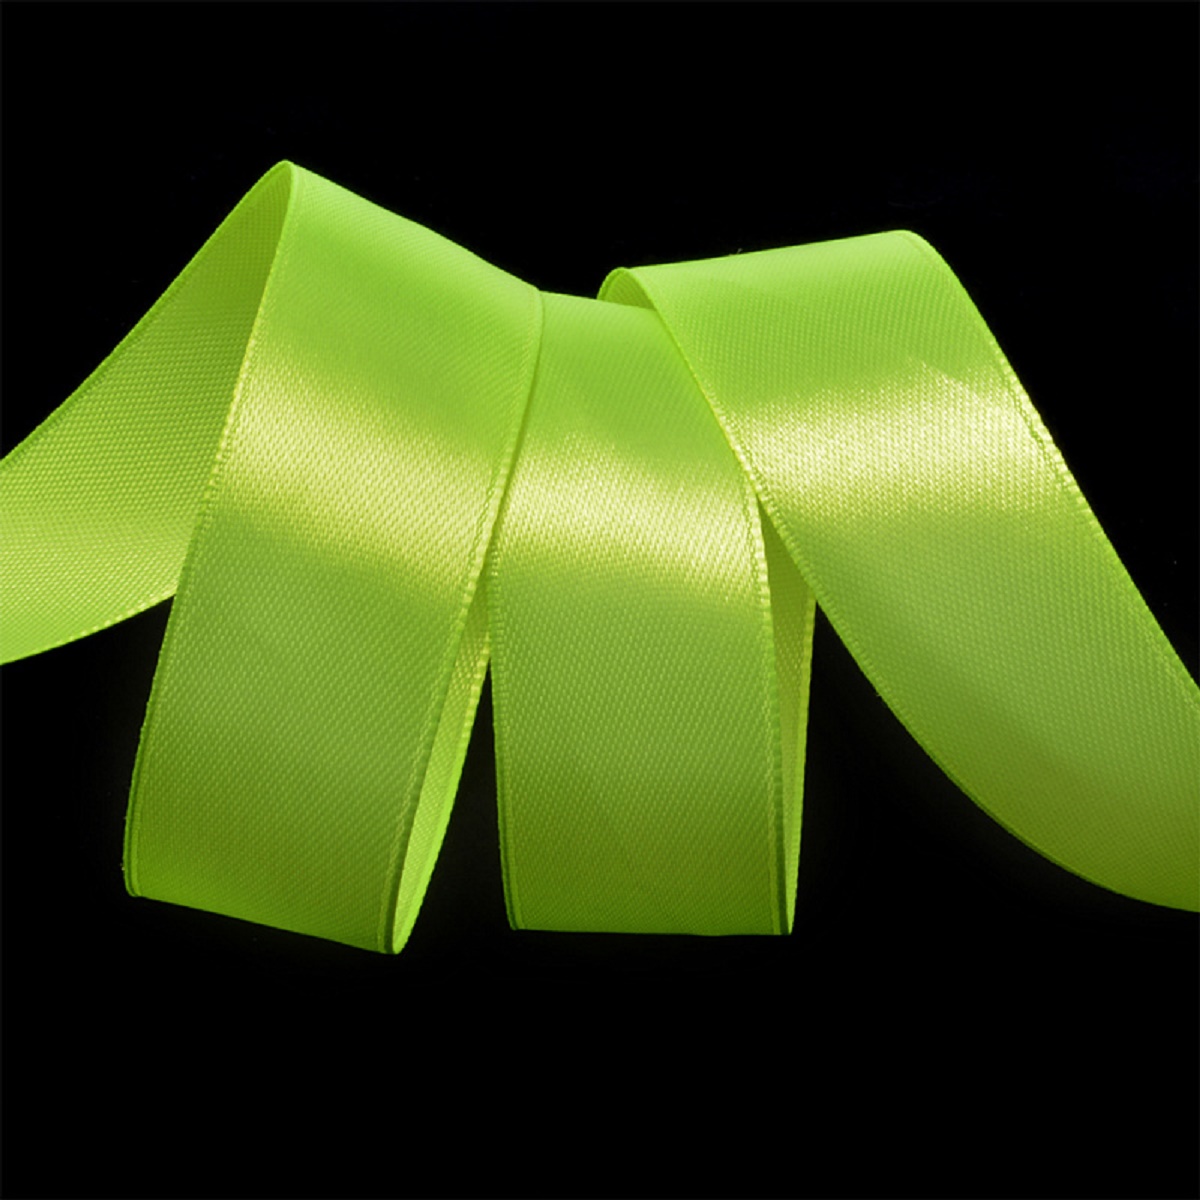 Желто зеленый цвет ленточки. Лента атласная 1,2 см. Лента атласная "lifemagazin" для упаковки 25мм цвет: зеленый. Салатовая атласная лента. Лента зеленого цвета.